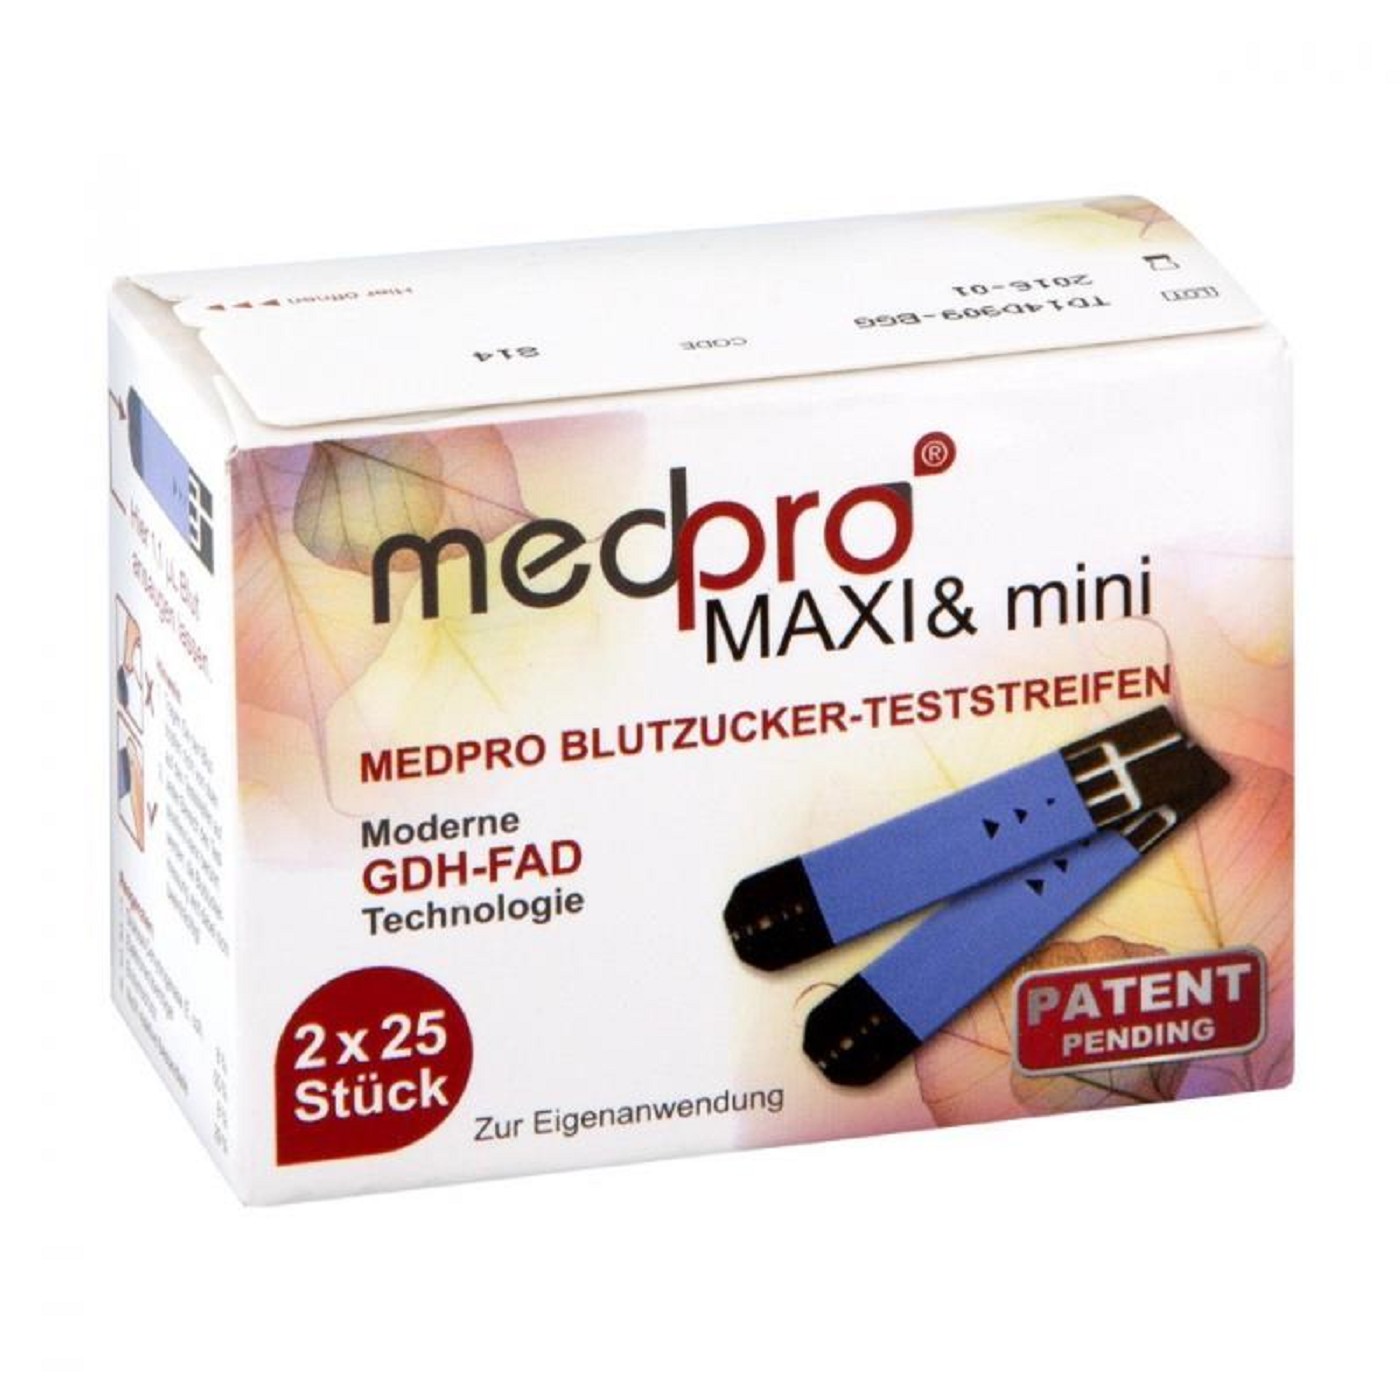 medpro® MAXI & mini Blutzucker-Teststreifen 2x25 Stück